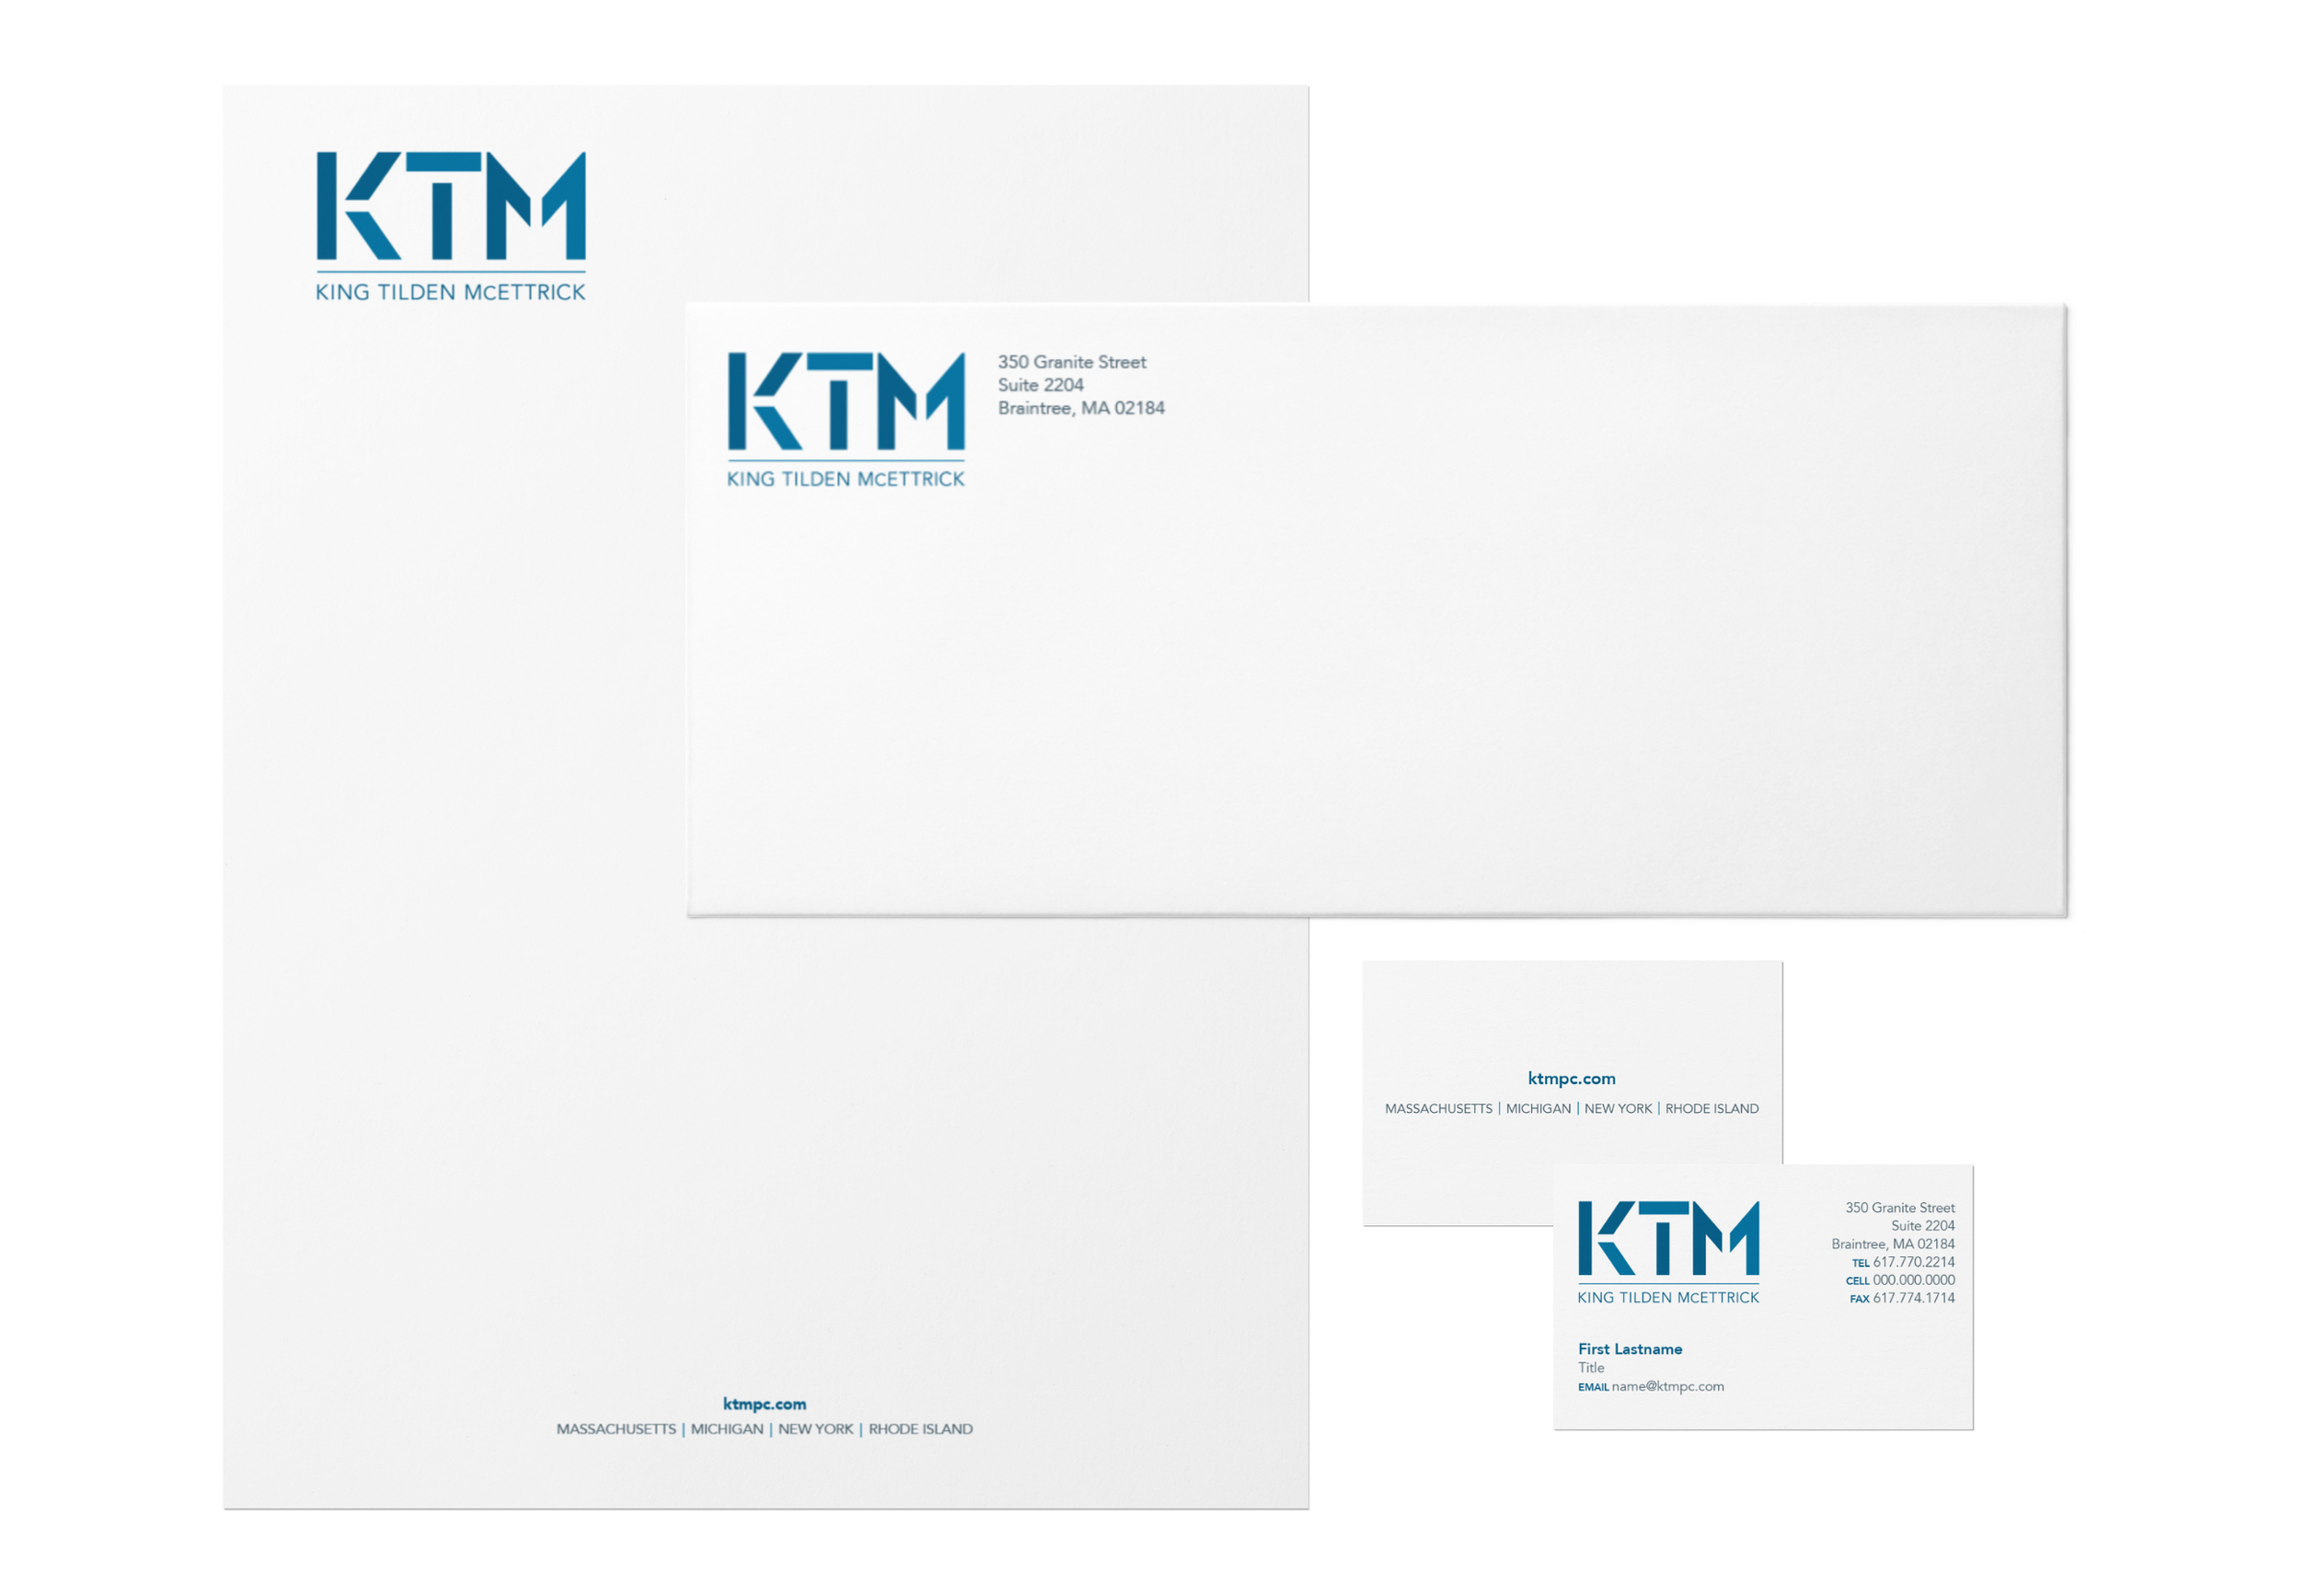 KTM stationery design